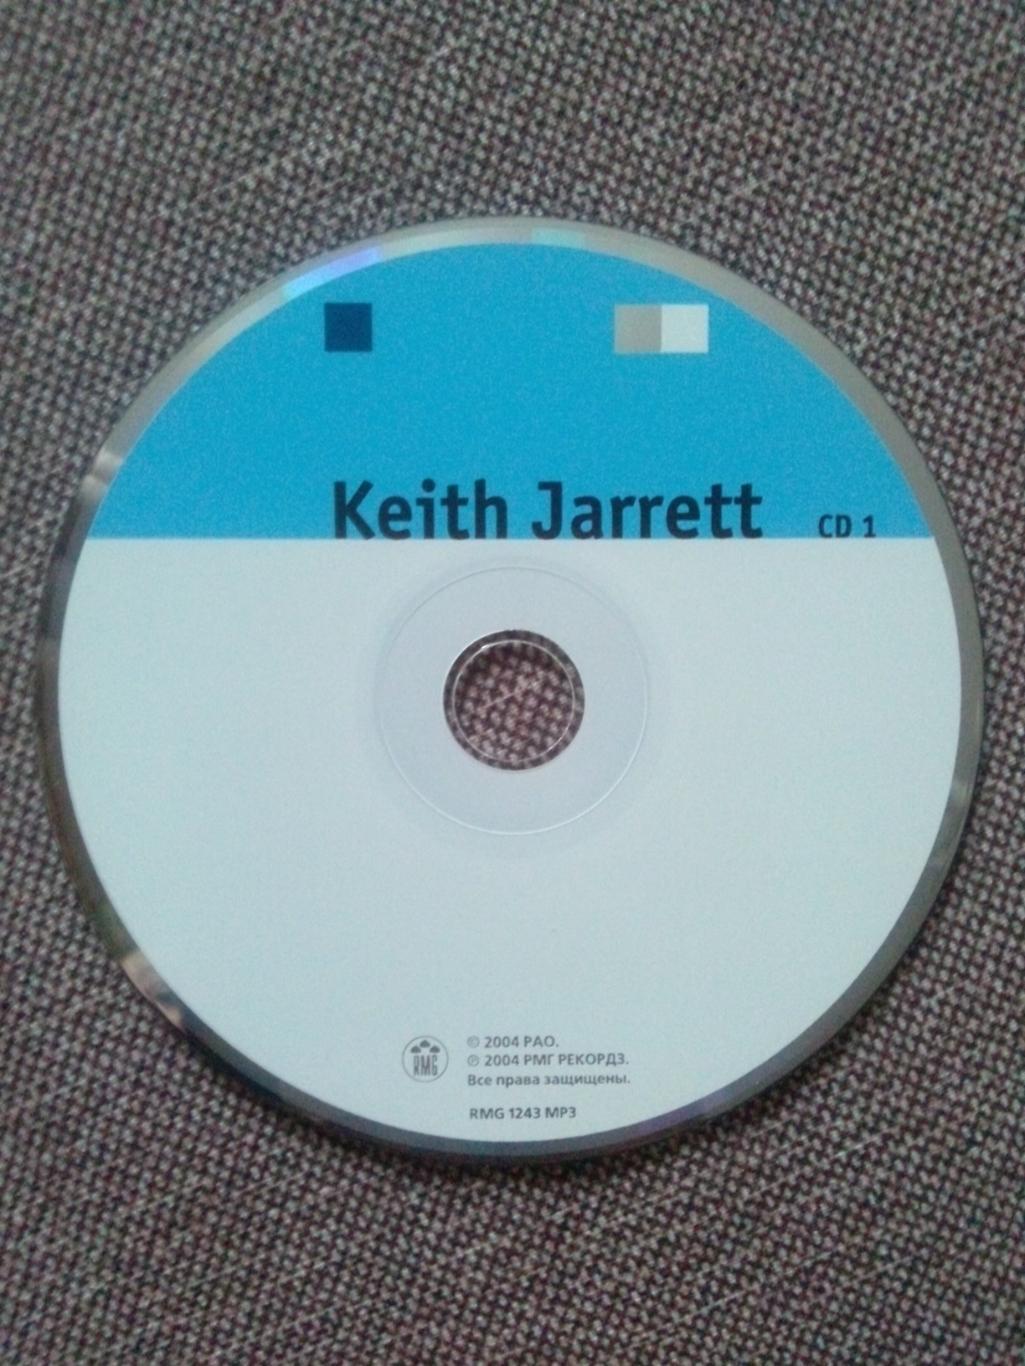 MP - 3 CD : Keith Jarrett (9 альбомов) 1968 - 1979 гг. Джаз Jazz Рок музыка 5